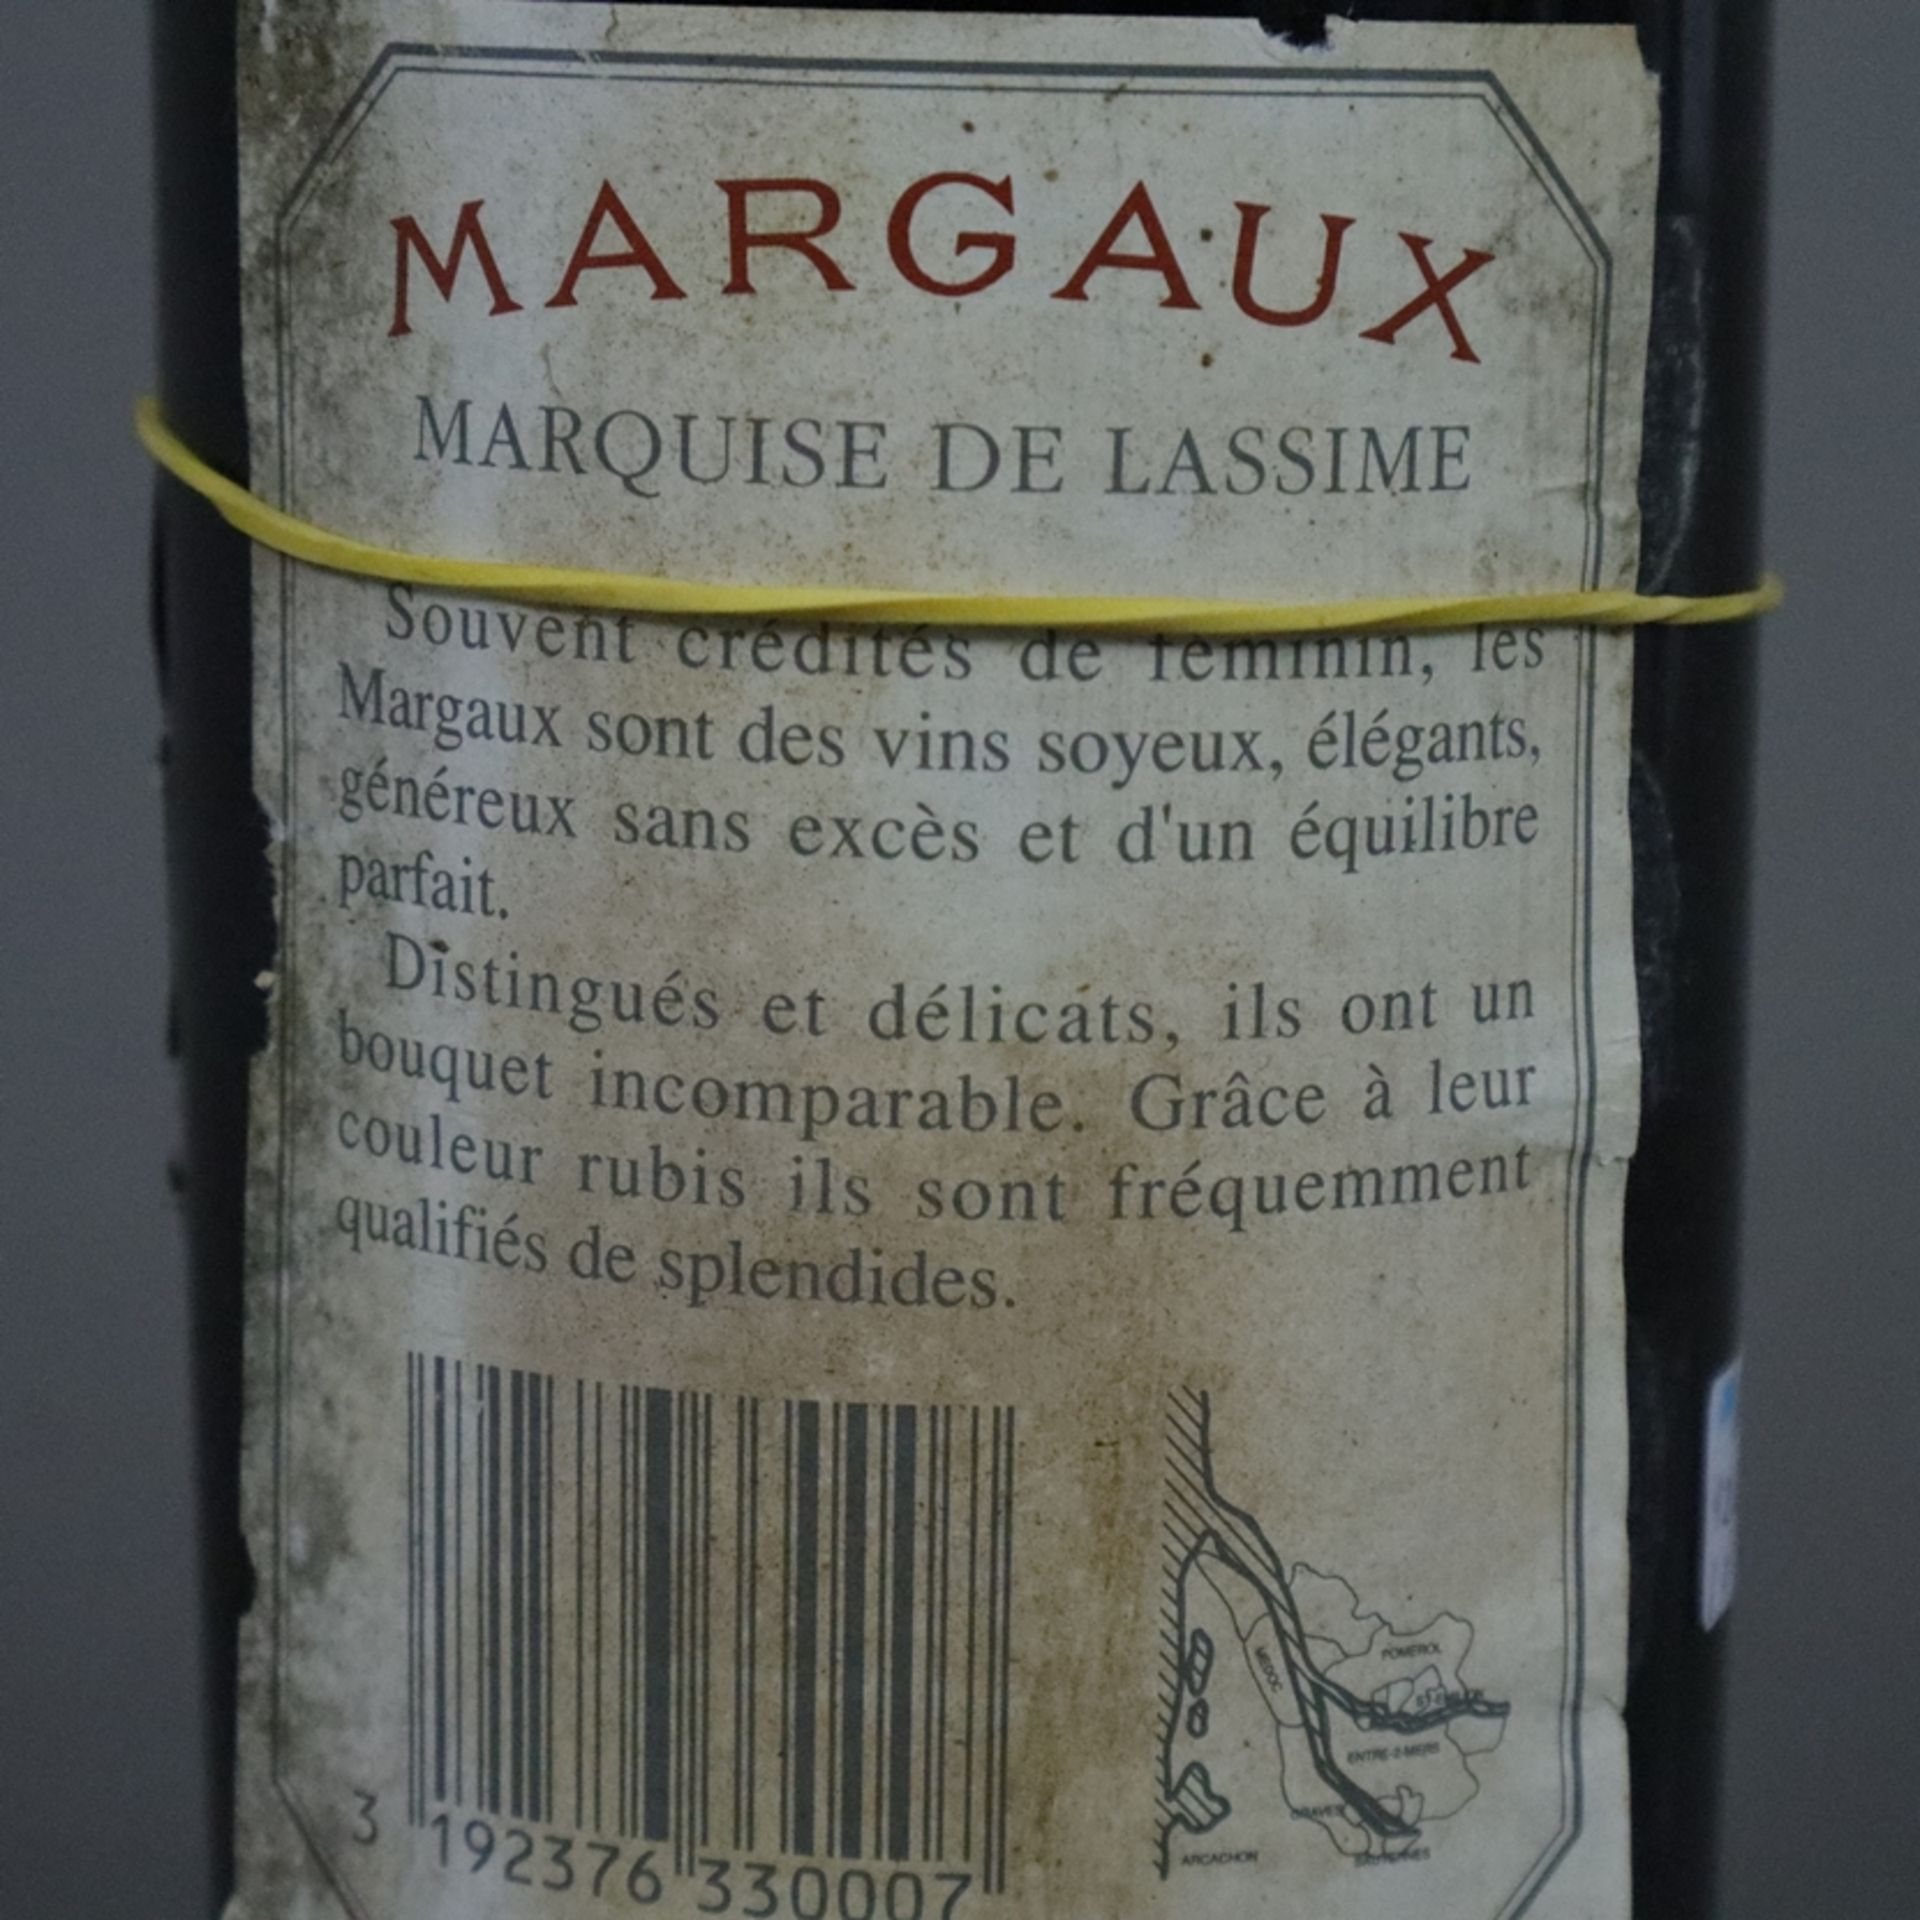 Weinkonvolut - 3 Flaschen 1987 Margaux, Marquise de Lassime, France, 75 cl, Füllstand: Top Shoulder - Image 5 of 7